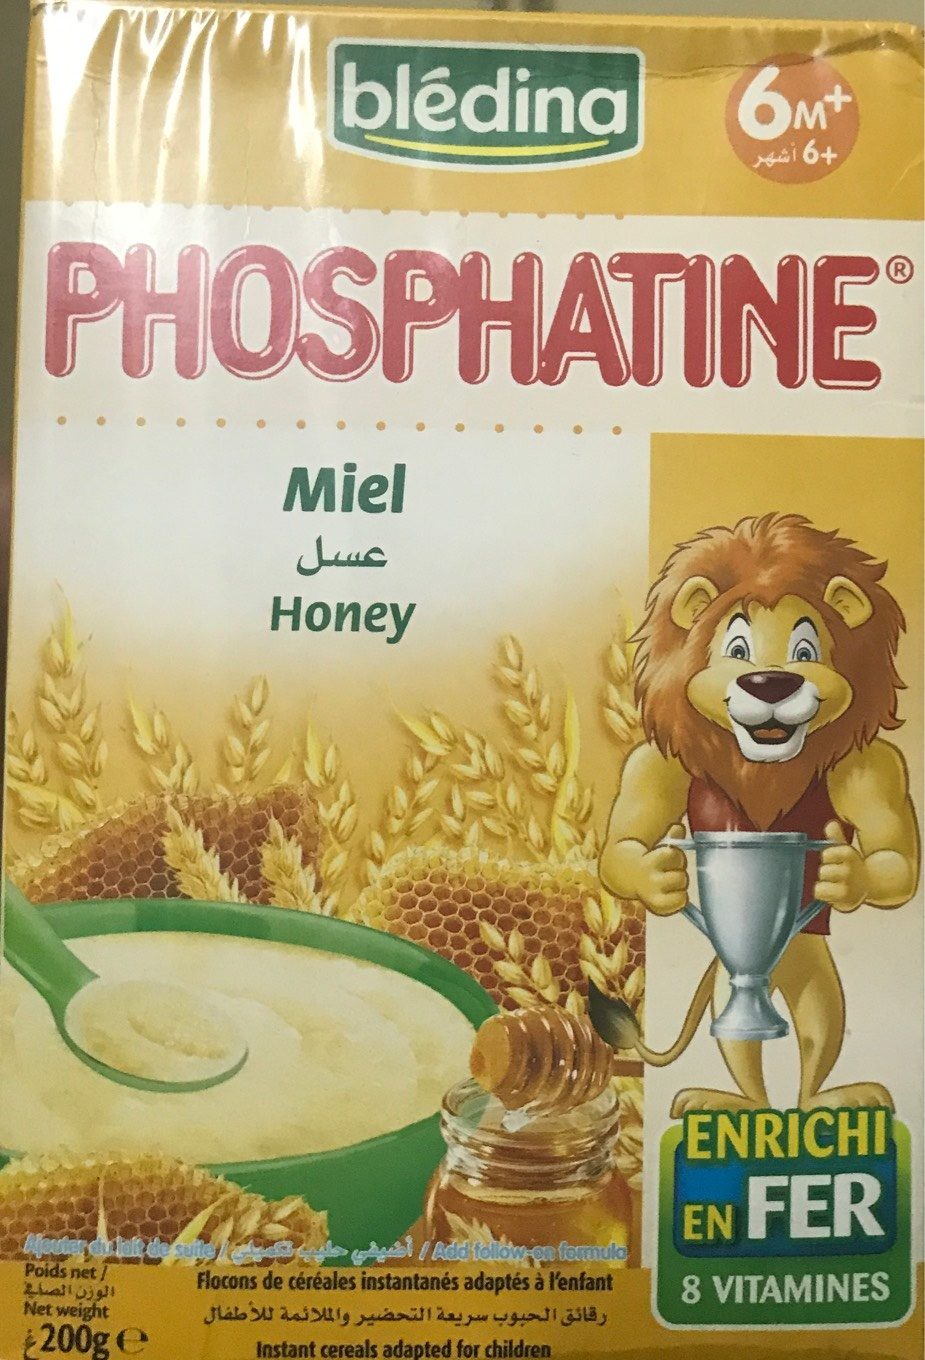 Phosphatine honey